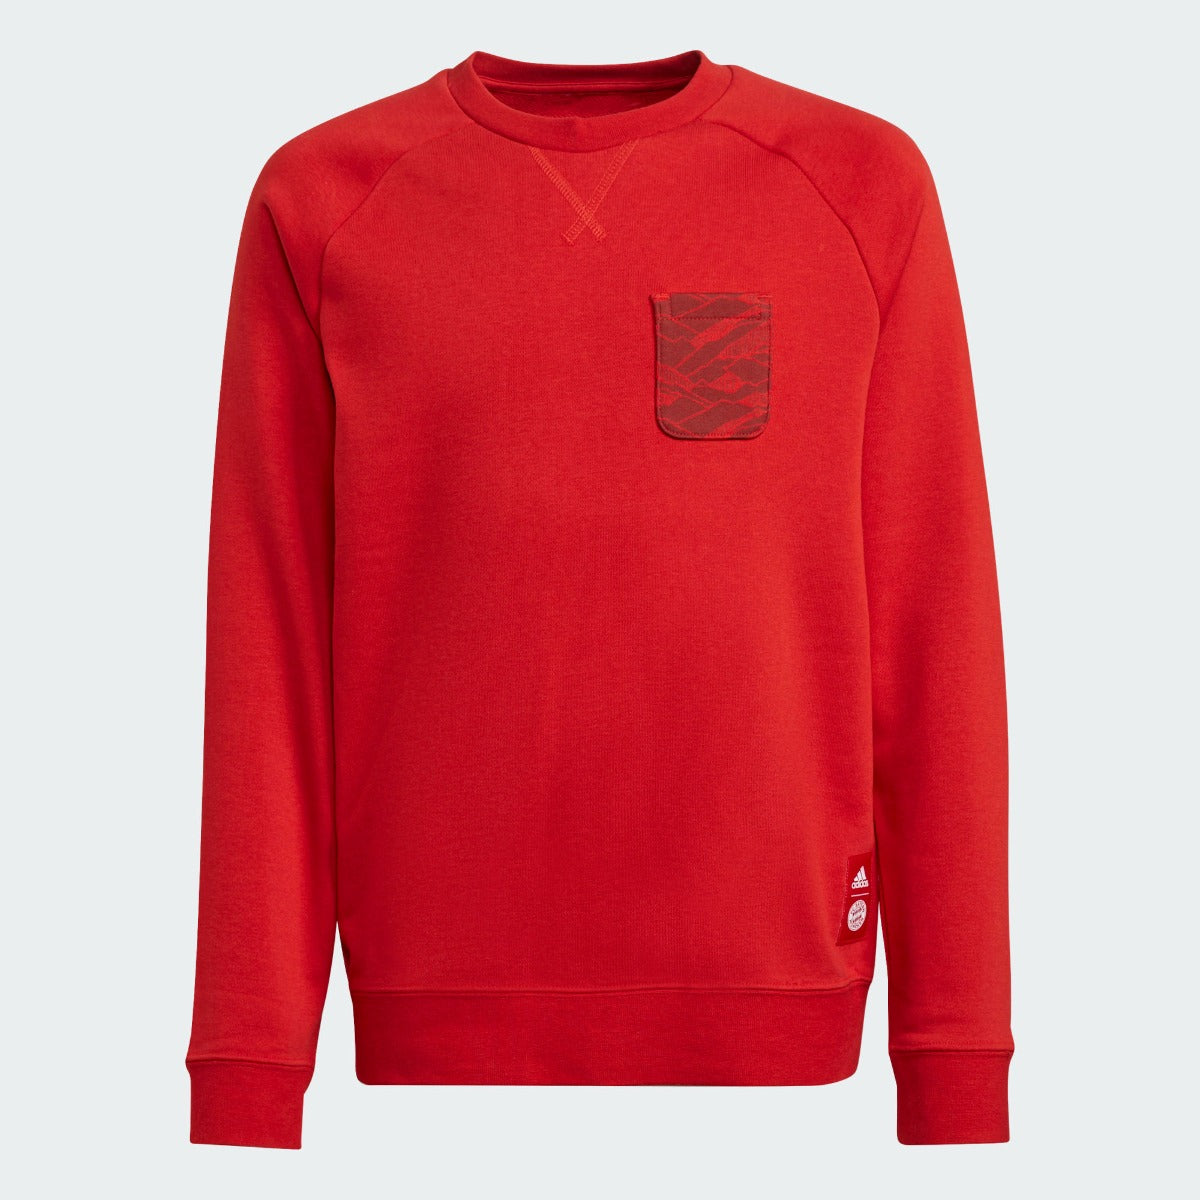 Adidas 2021-22 Bayern Munich Youth Crew Sweatshirt - Red (Front)